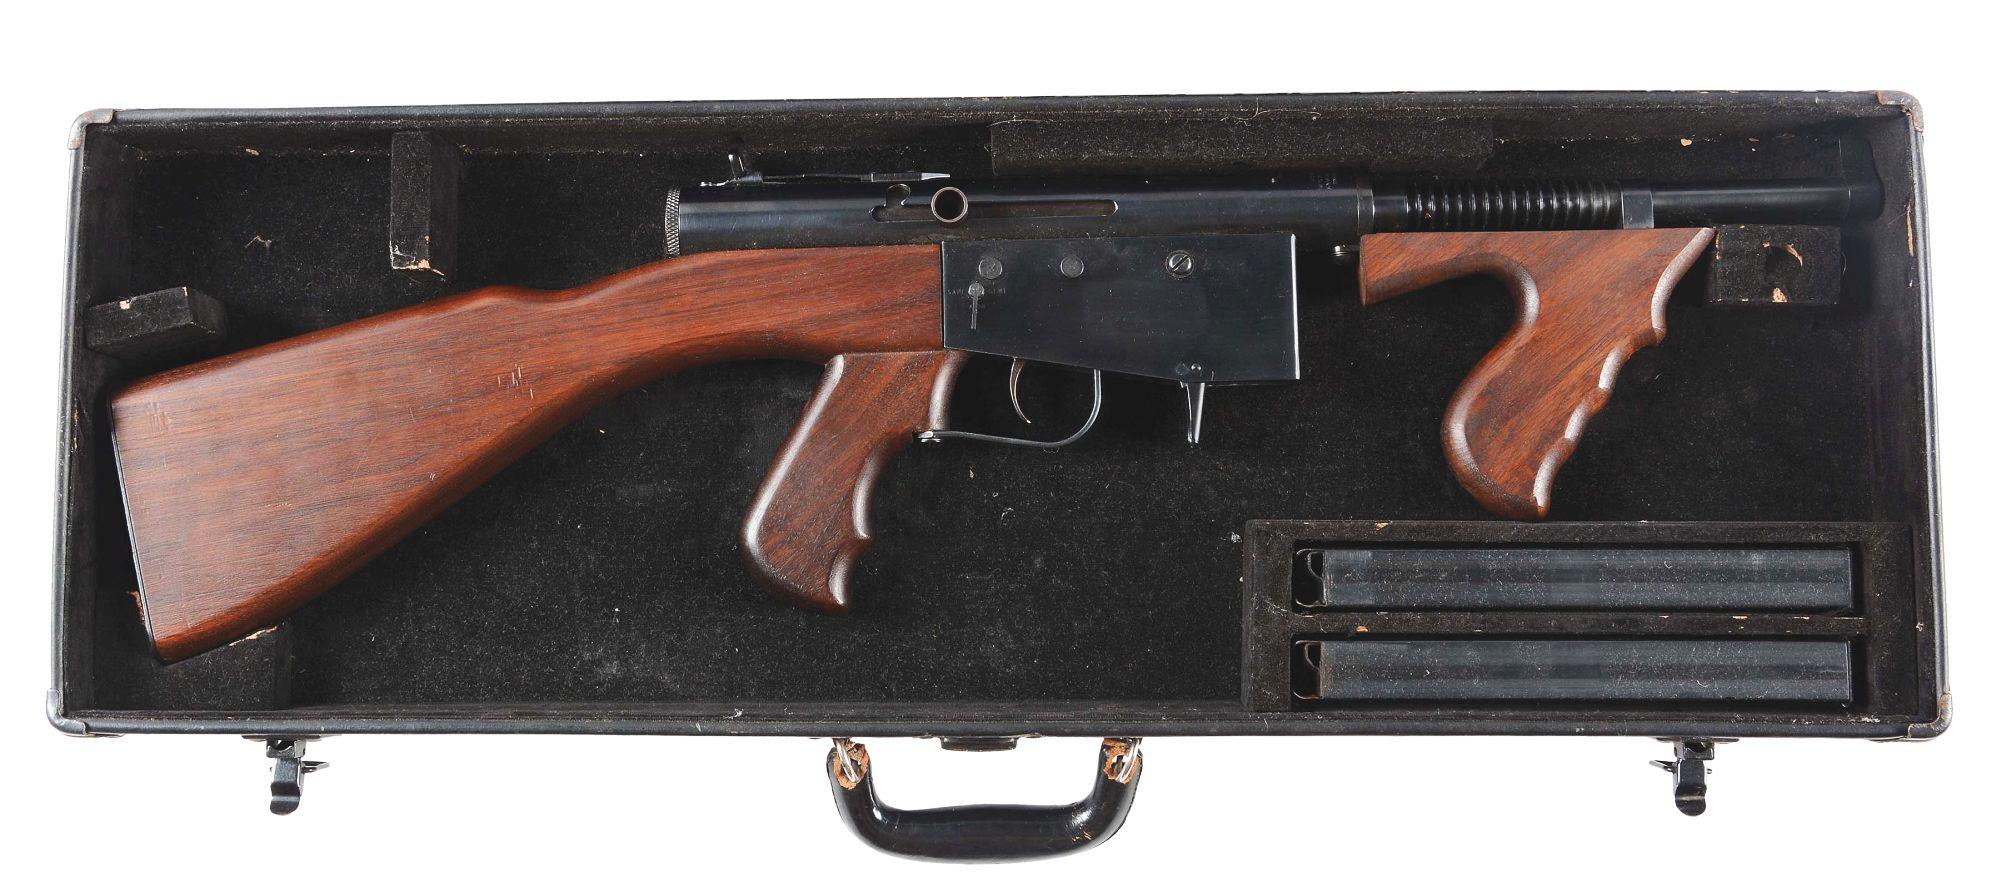 (N) Near Mint Early Police Ordnance Model 6 Machine Gun in Original Case with Magazines & Accessorie